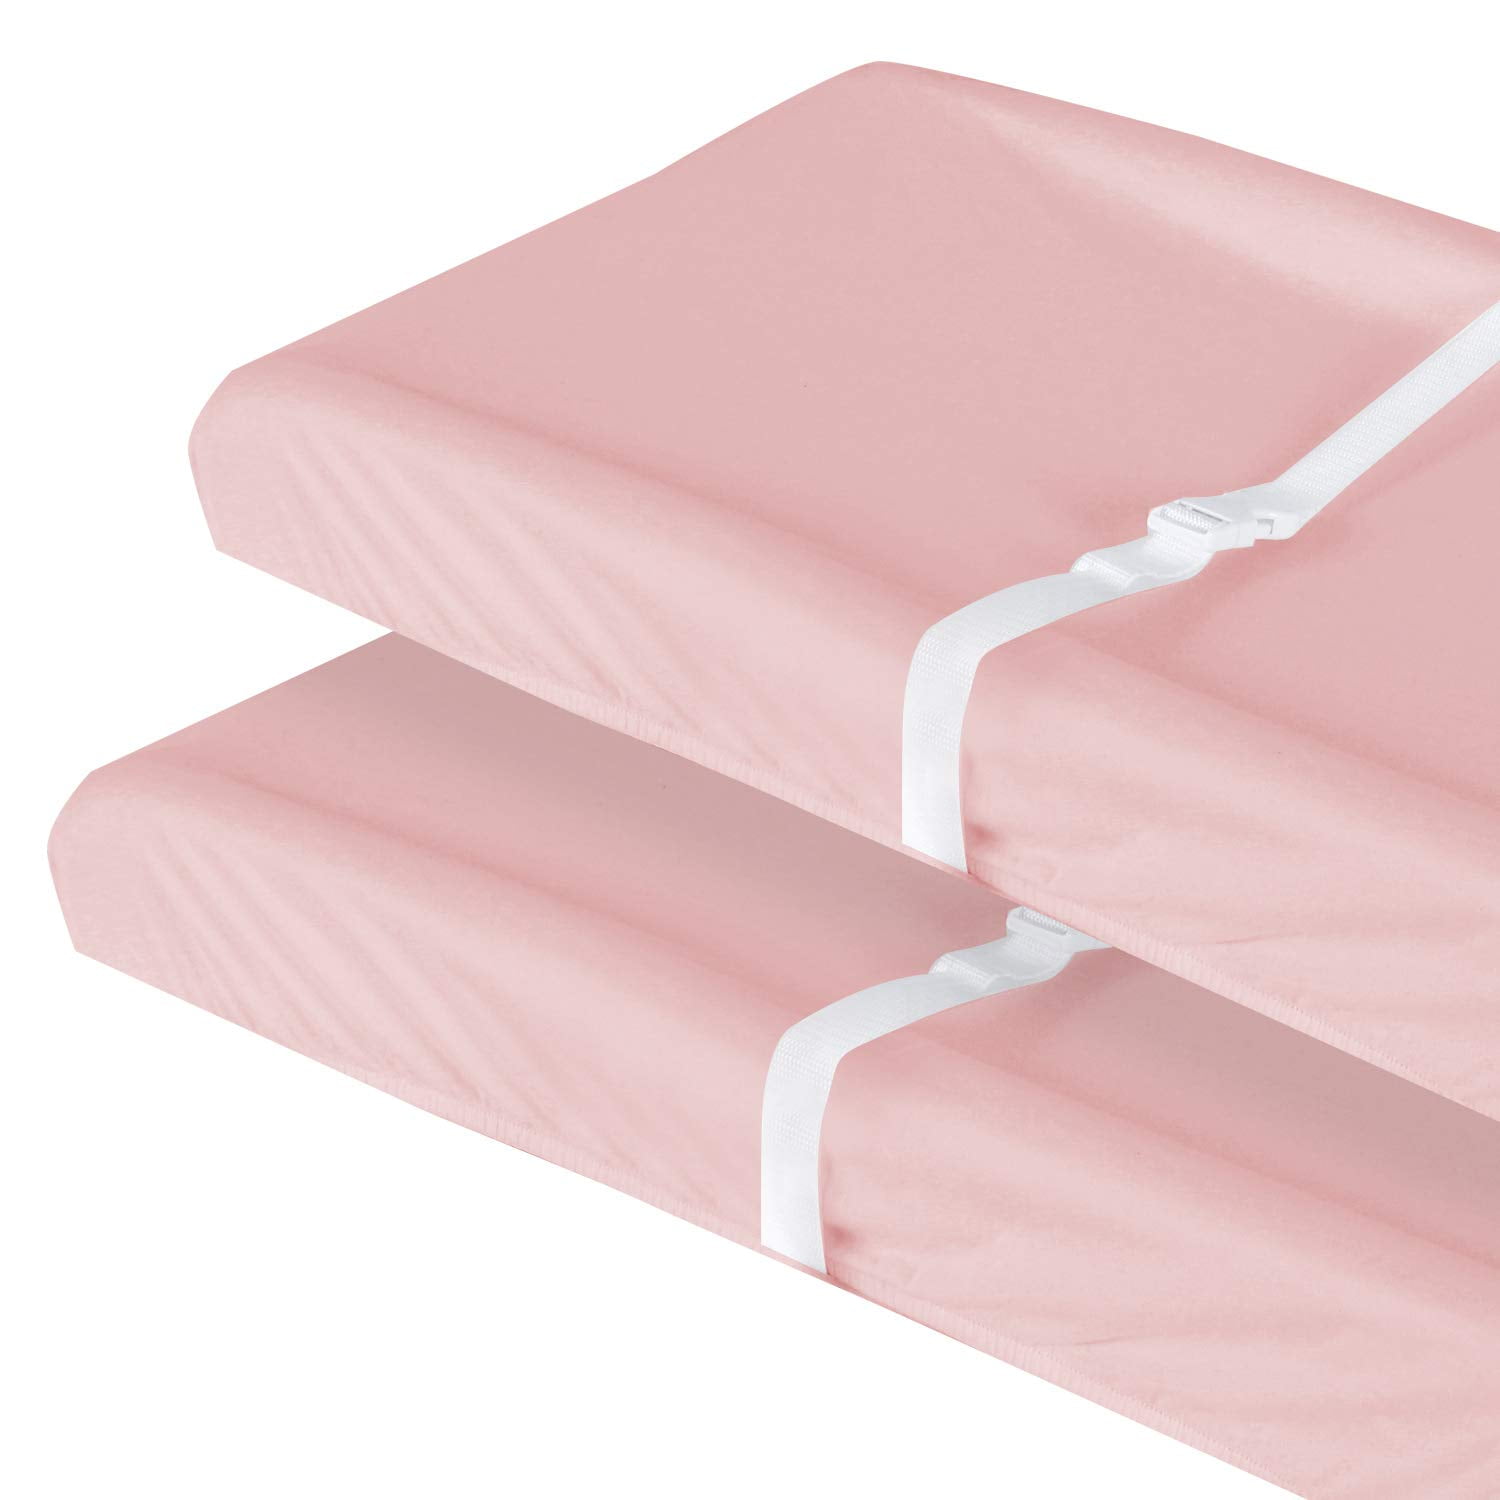 Baby Crib Sheet Saver - Pink Chevron - Minky - Changing Pad - Waterproof on  , $30.00